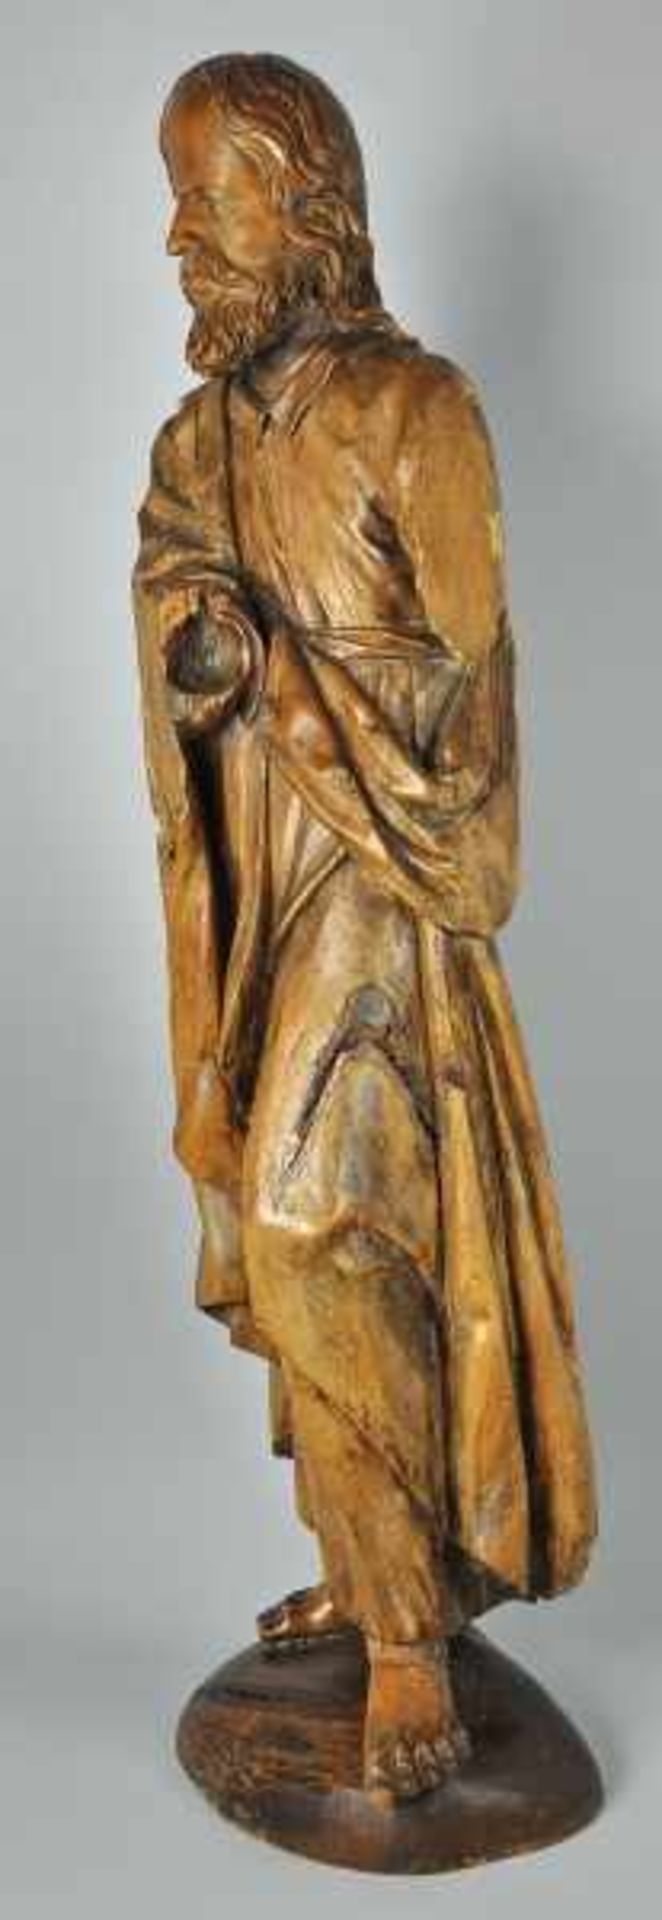 CHRISTUS 3/4 rund geschnitzte Holzfigur, Rückseite gehöhlt, 17./18.Jh, auf späterer ovaler Basis, - Image 4 of 7